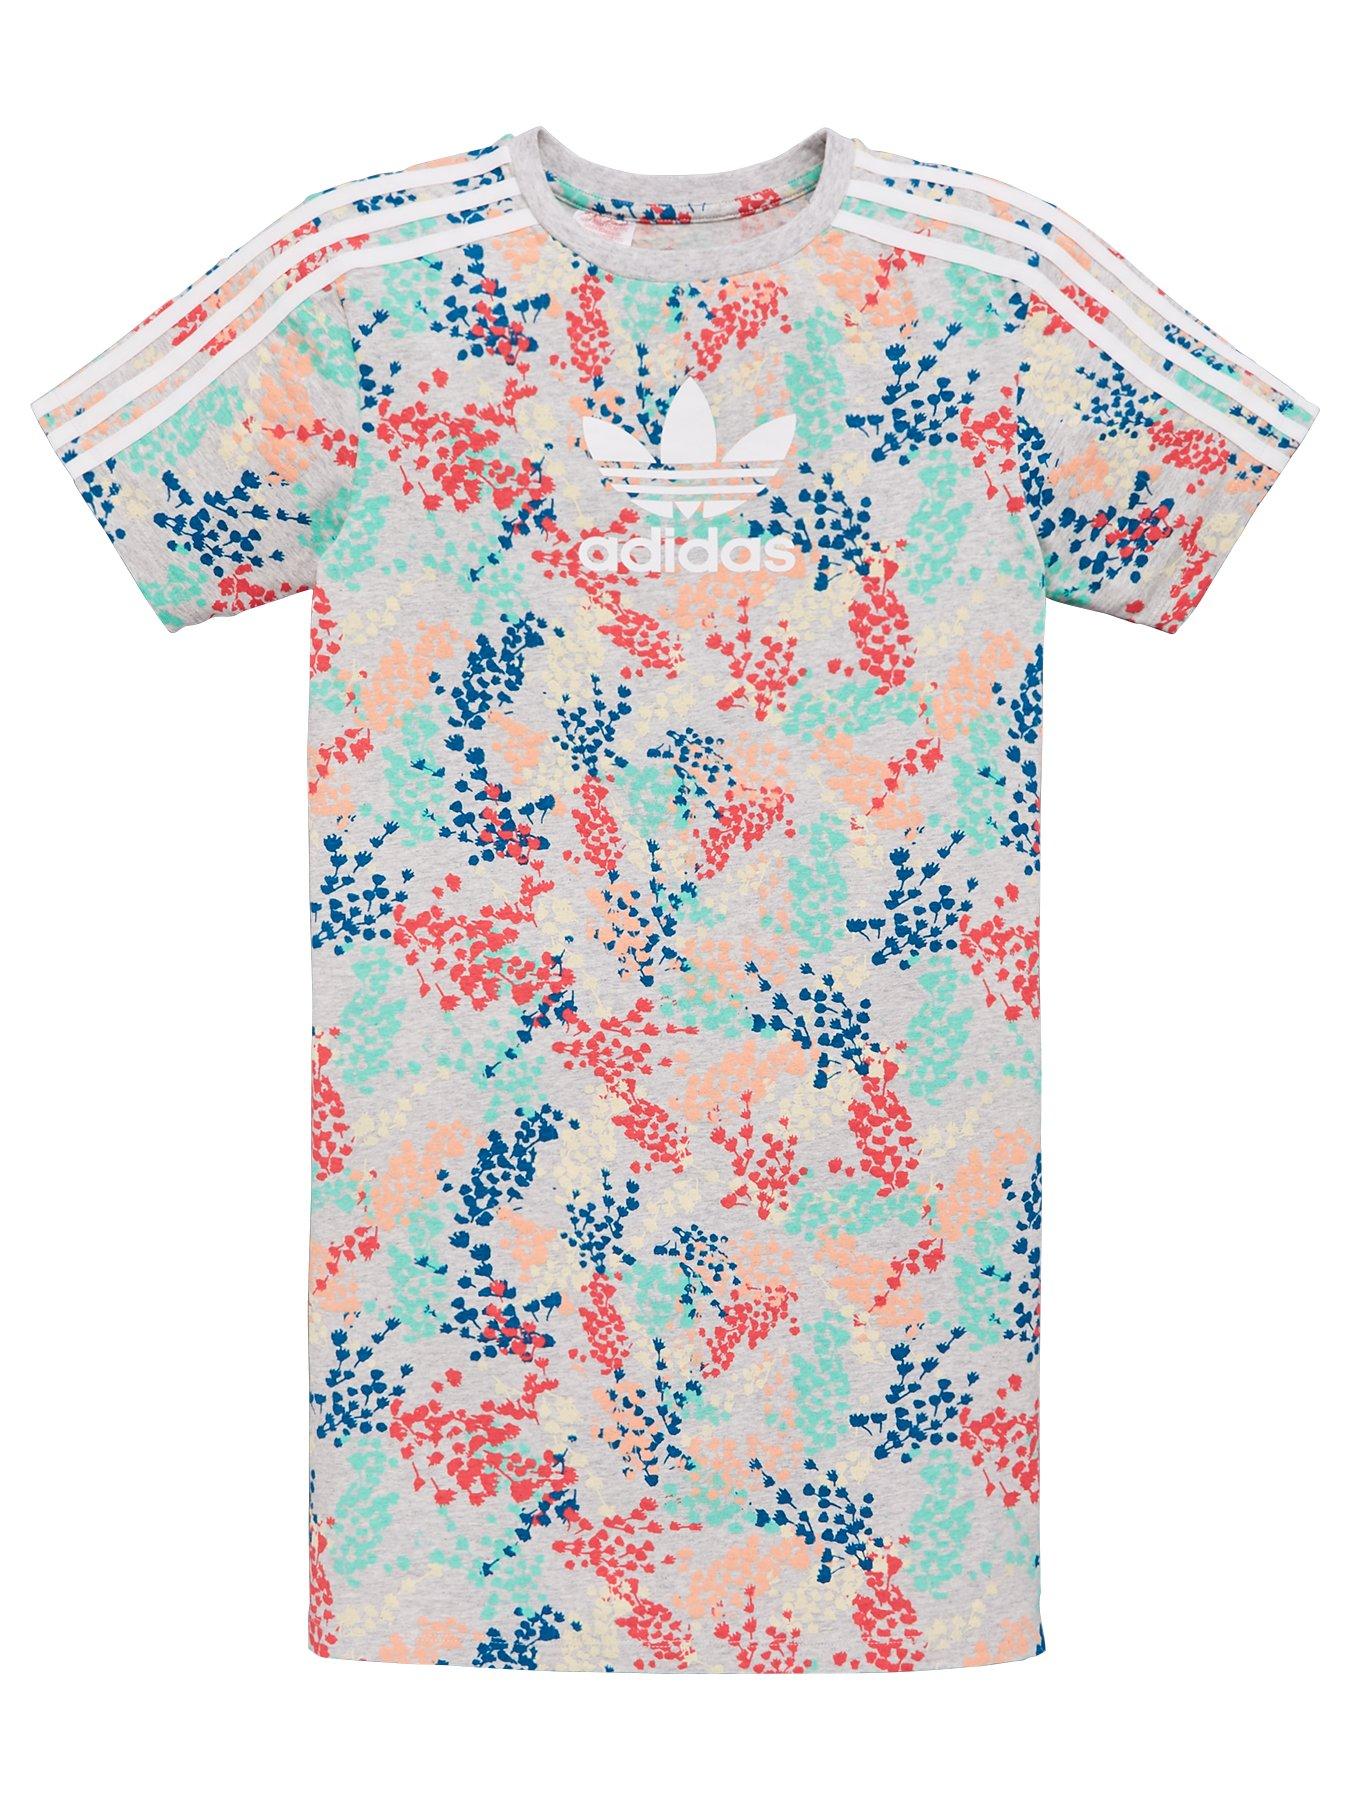 adidas flower print shirt